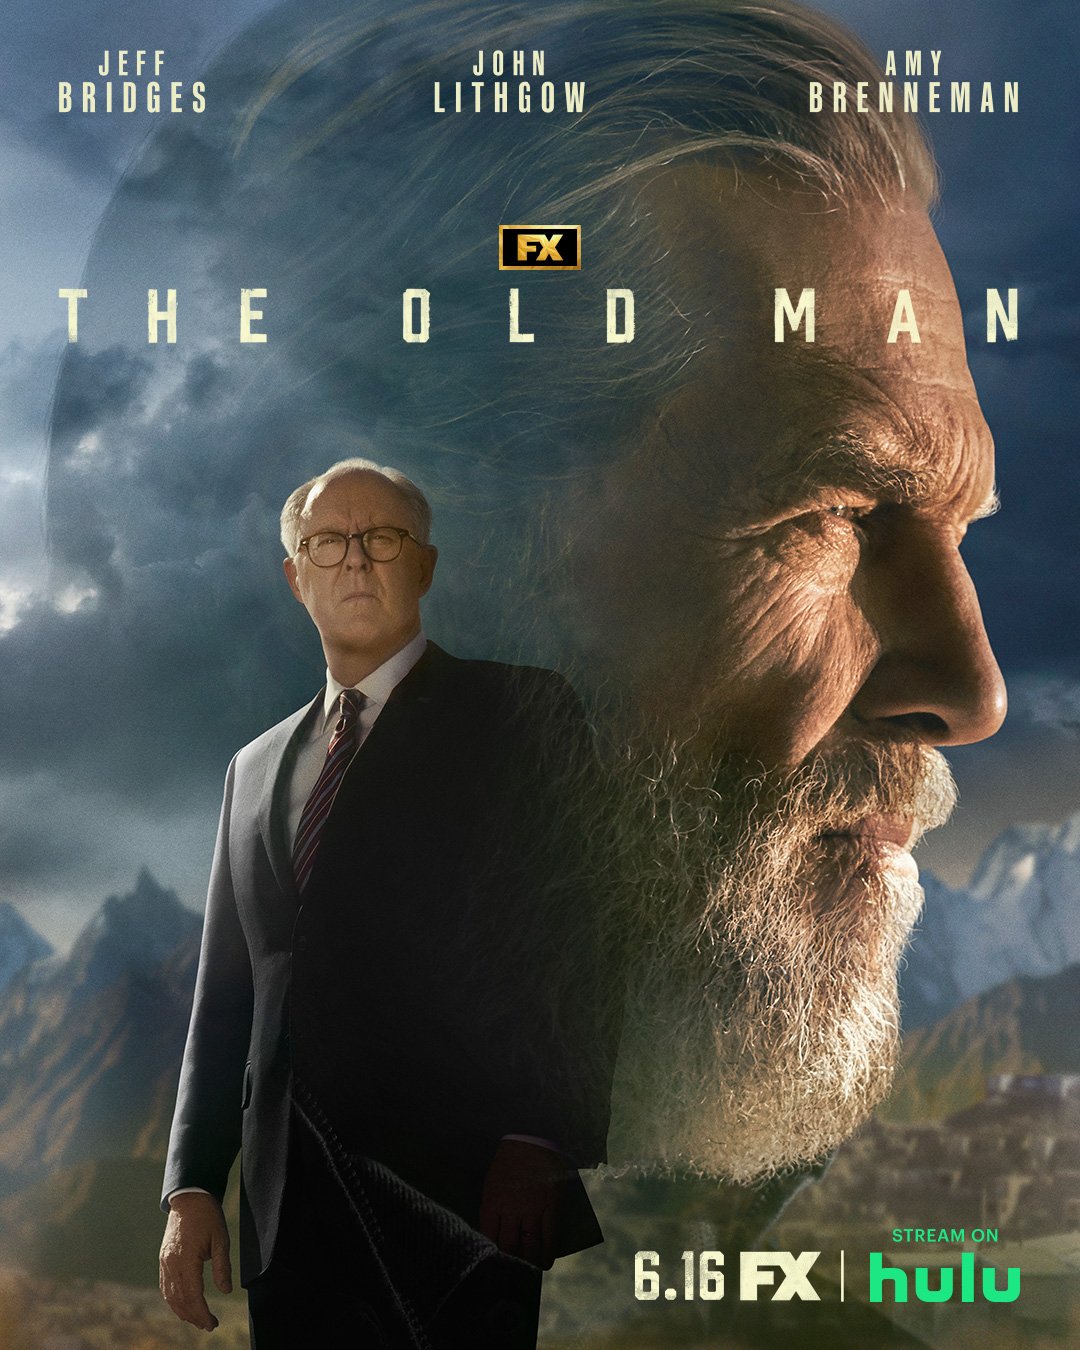 The Old Man Season 1